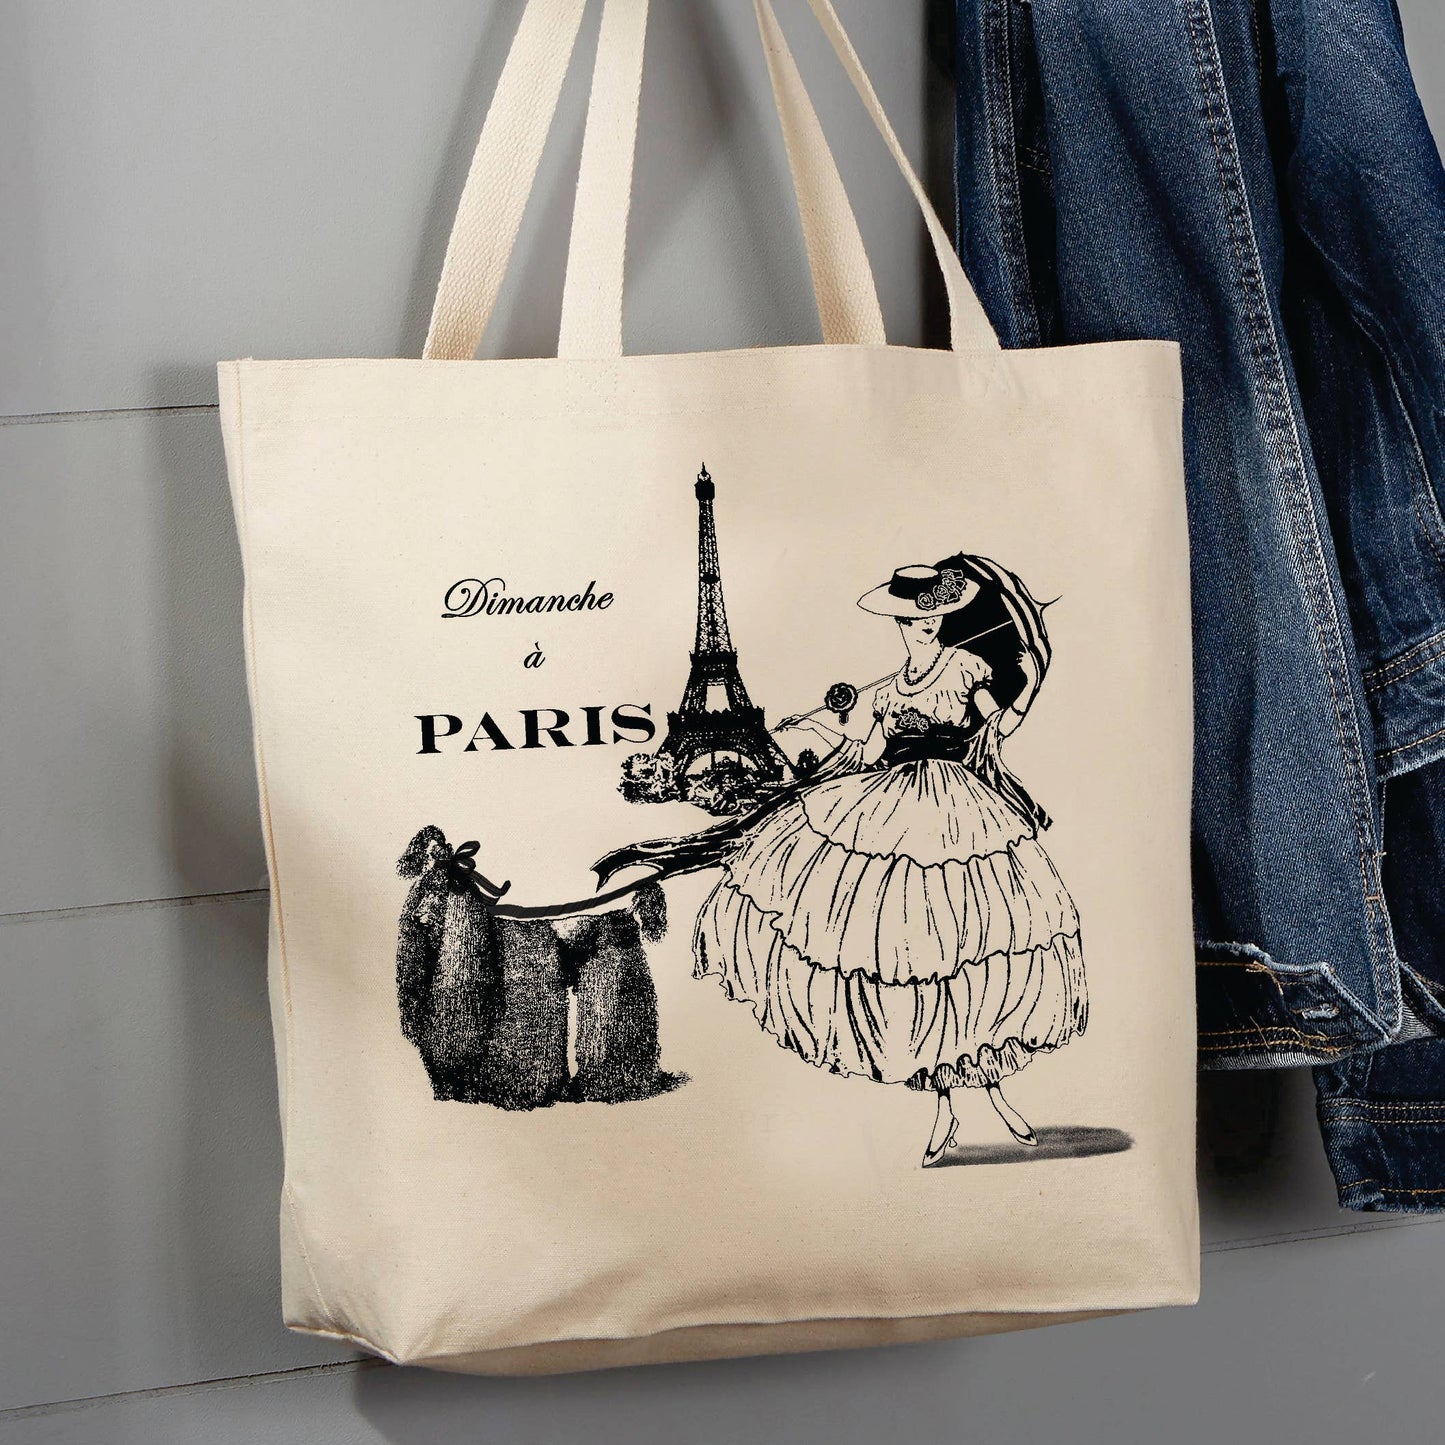 Paris France, 12 oz  Tote Bag